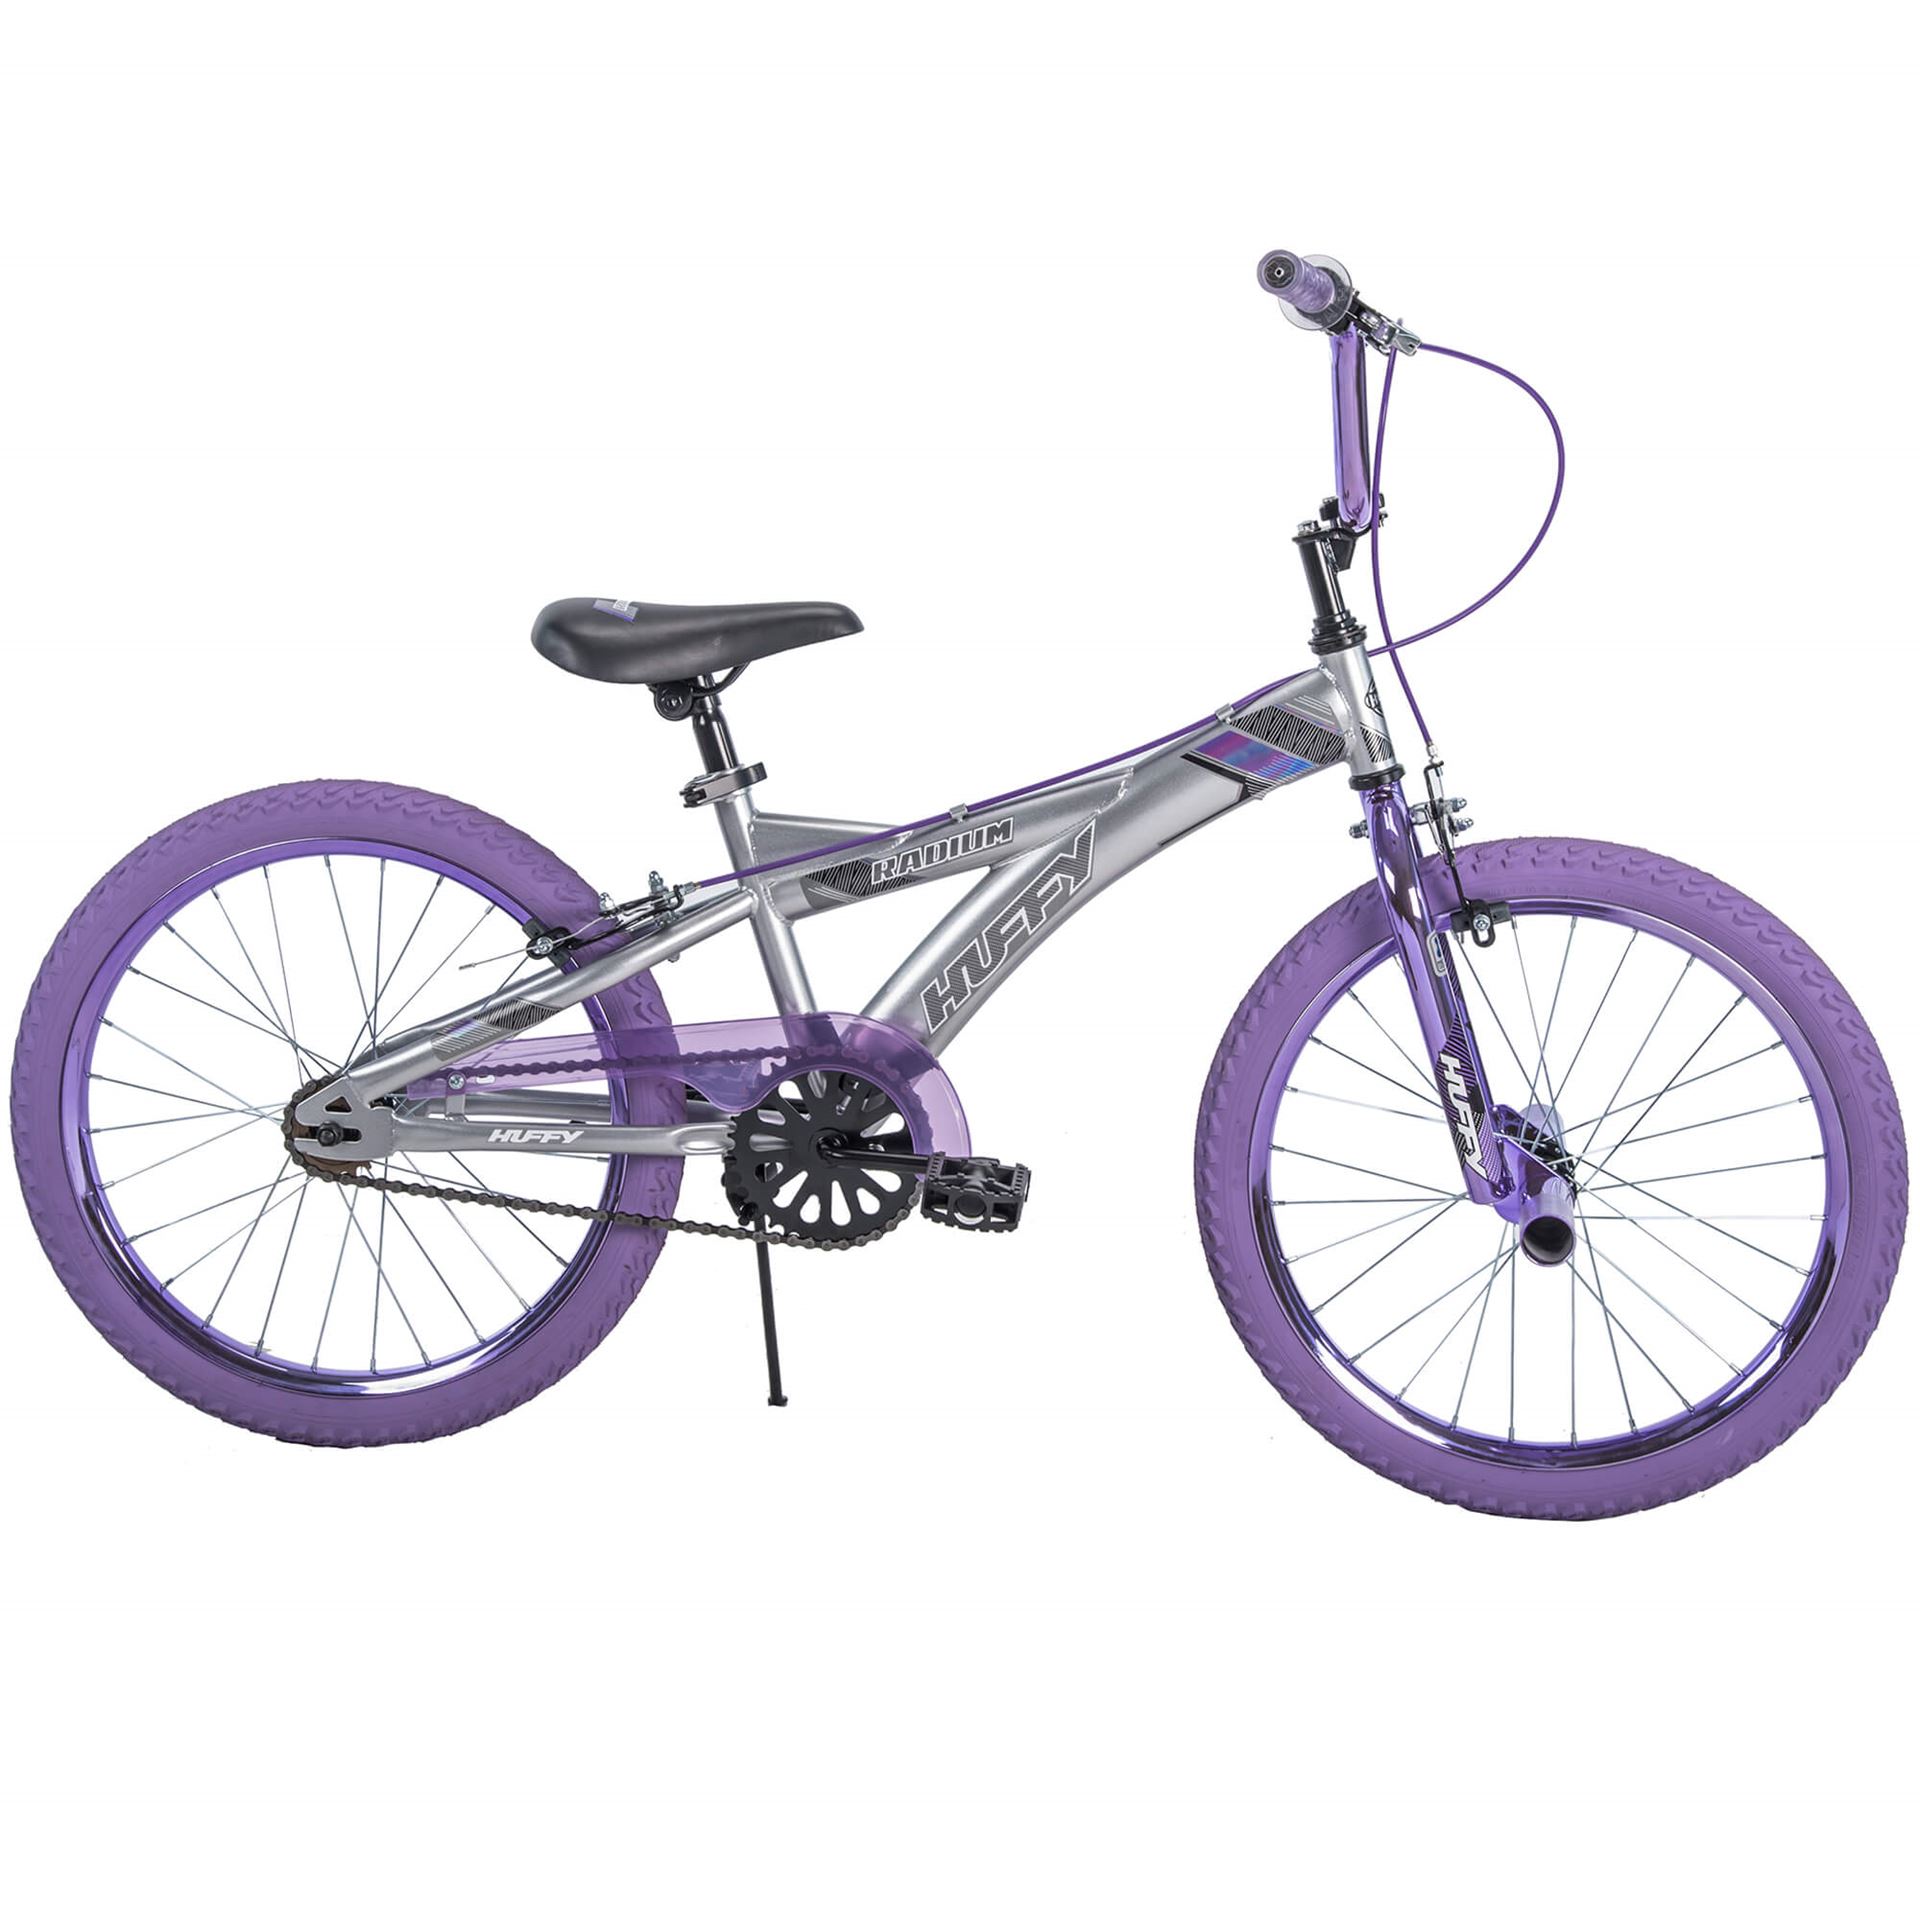 Huffy 20" Radium Girls' Metaloid BMX-Style Bike, Purple - image 2 of 6